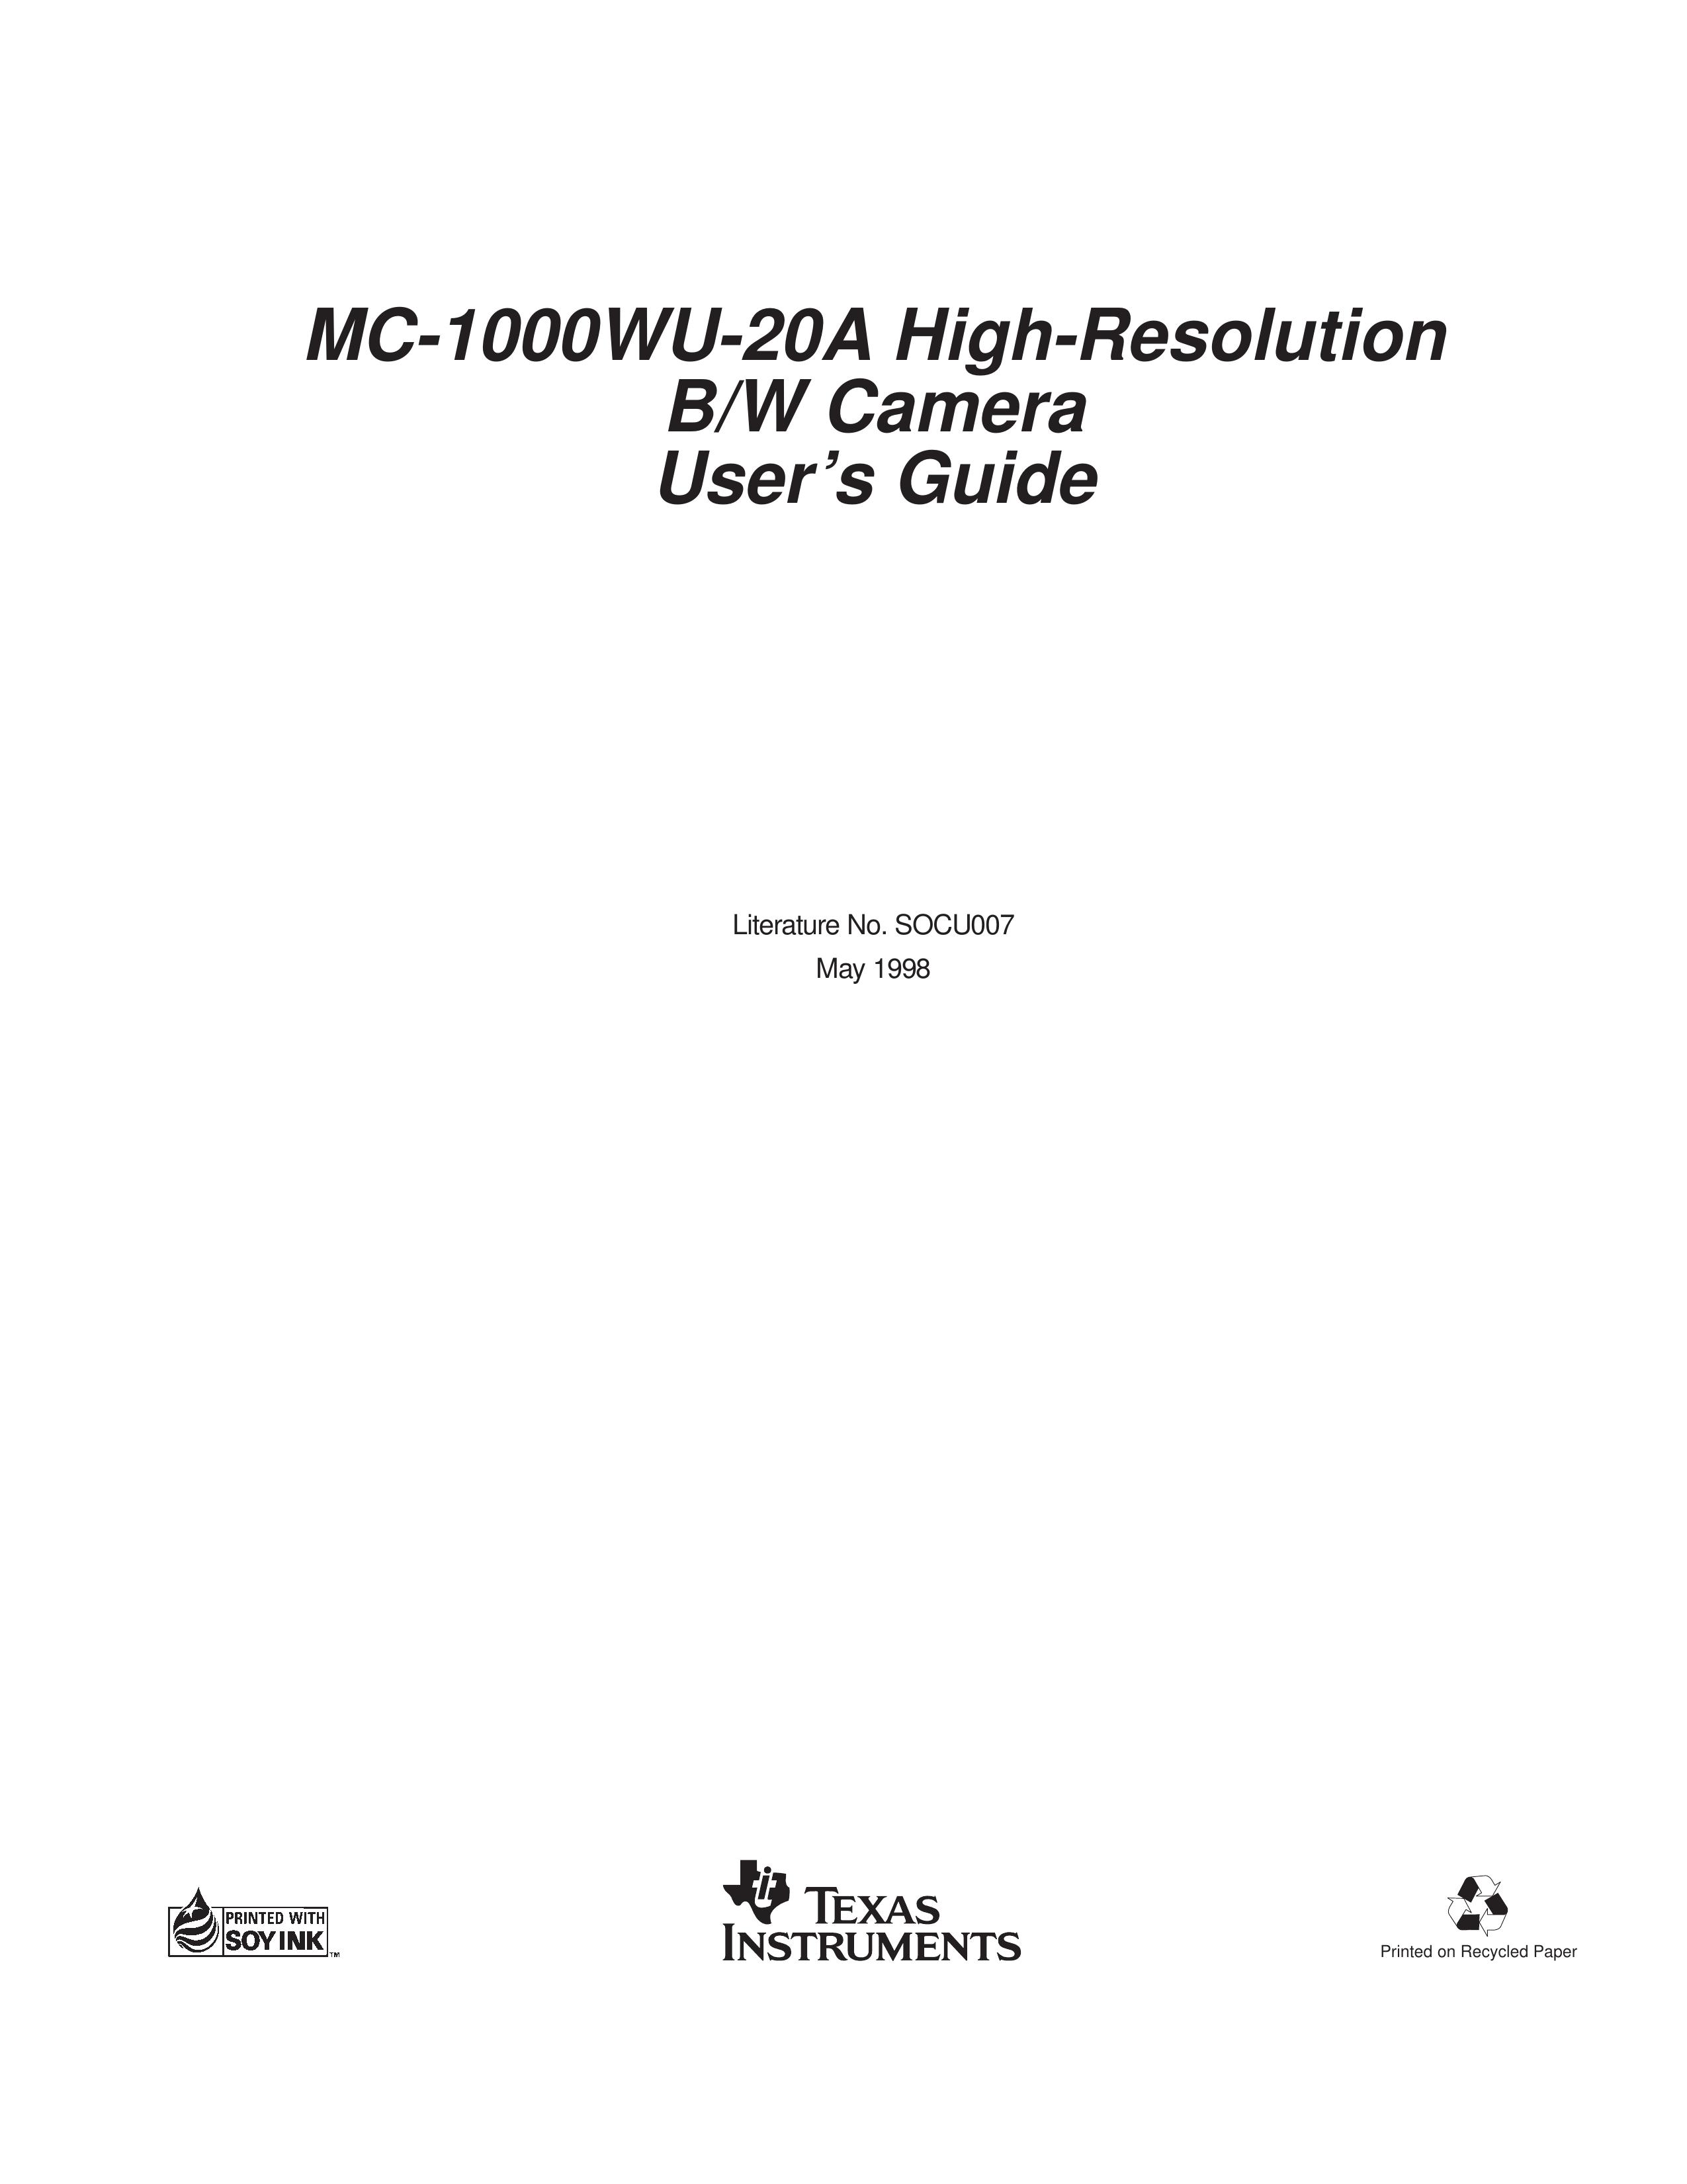 Texas Instruments MC-1000WU-20A Digital Camera User Manual